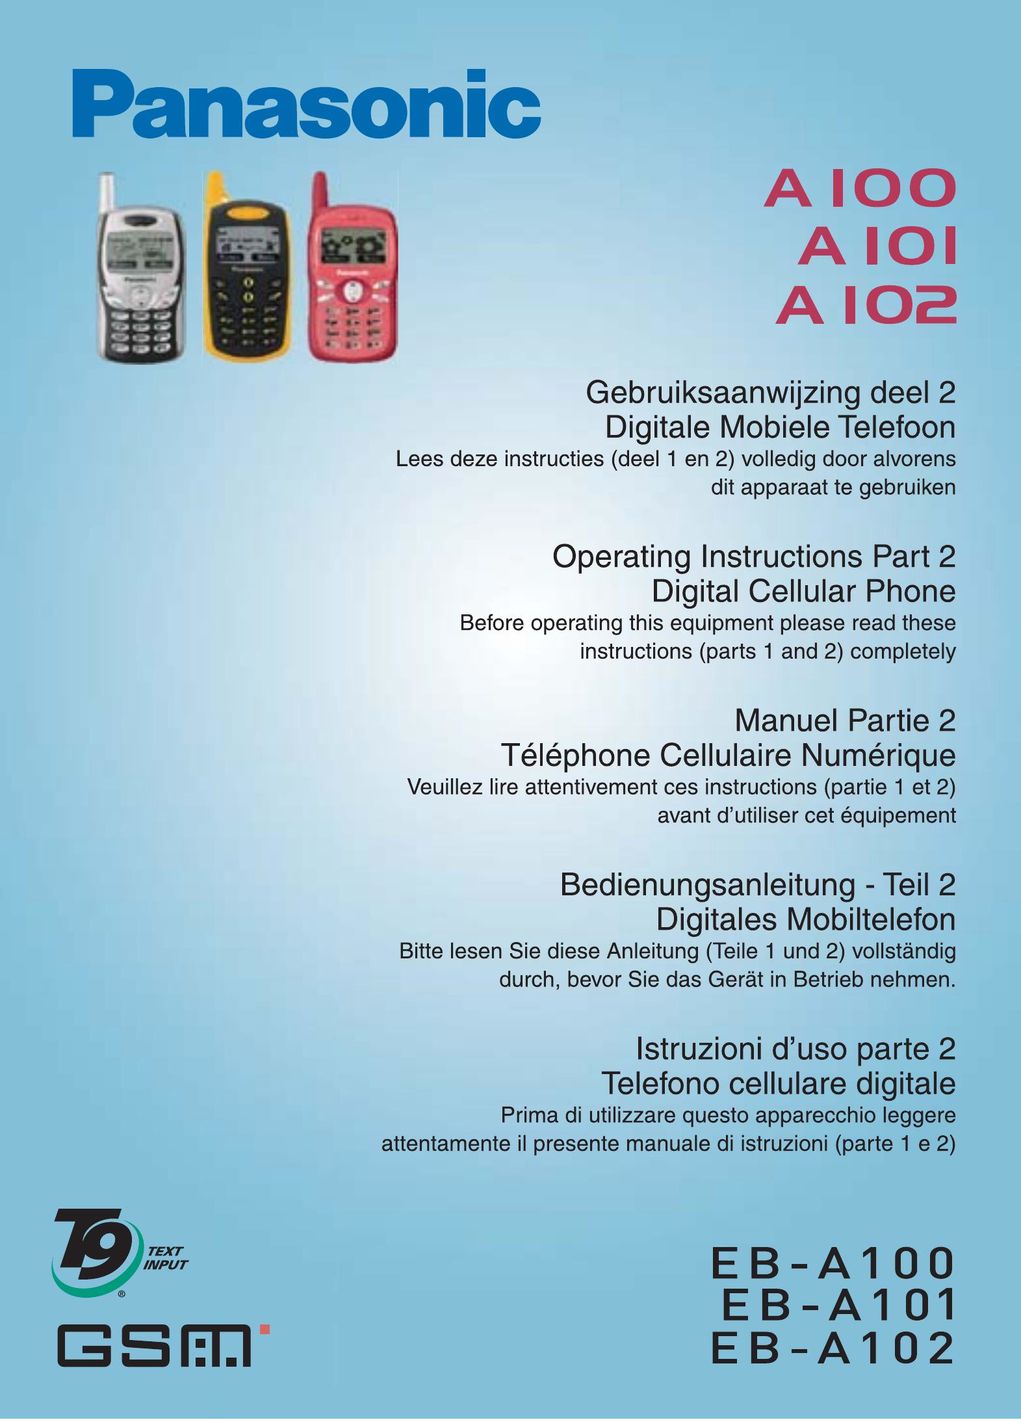 Panasonic A102 Cell Phone User Manual